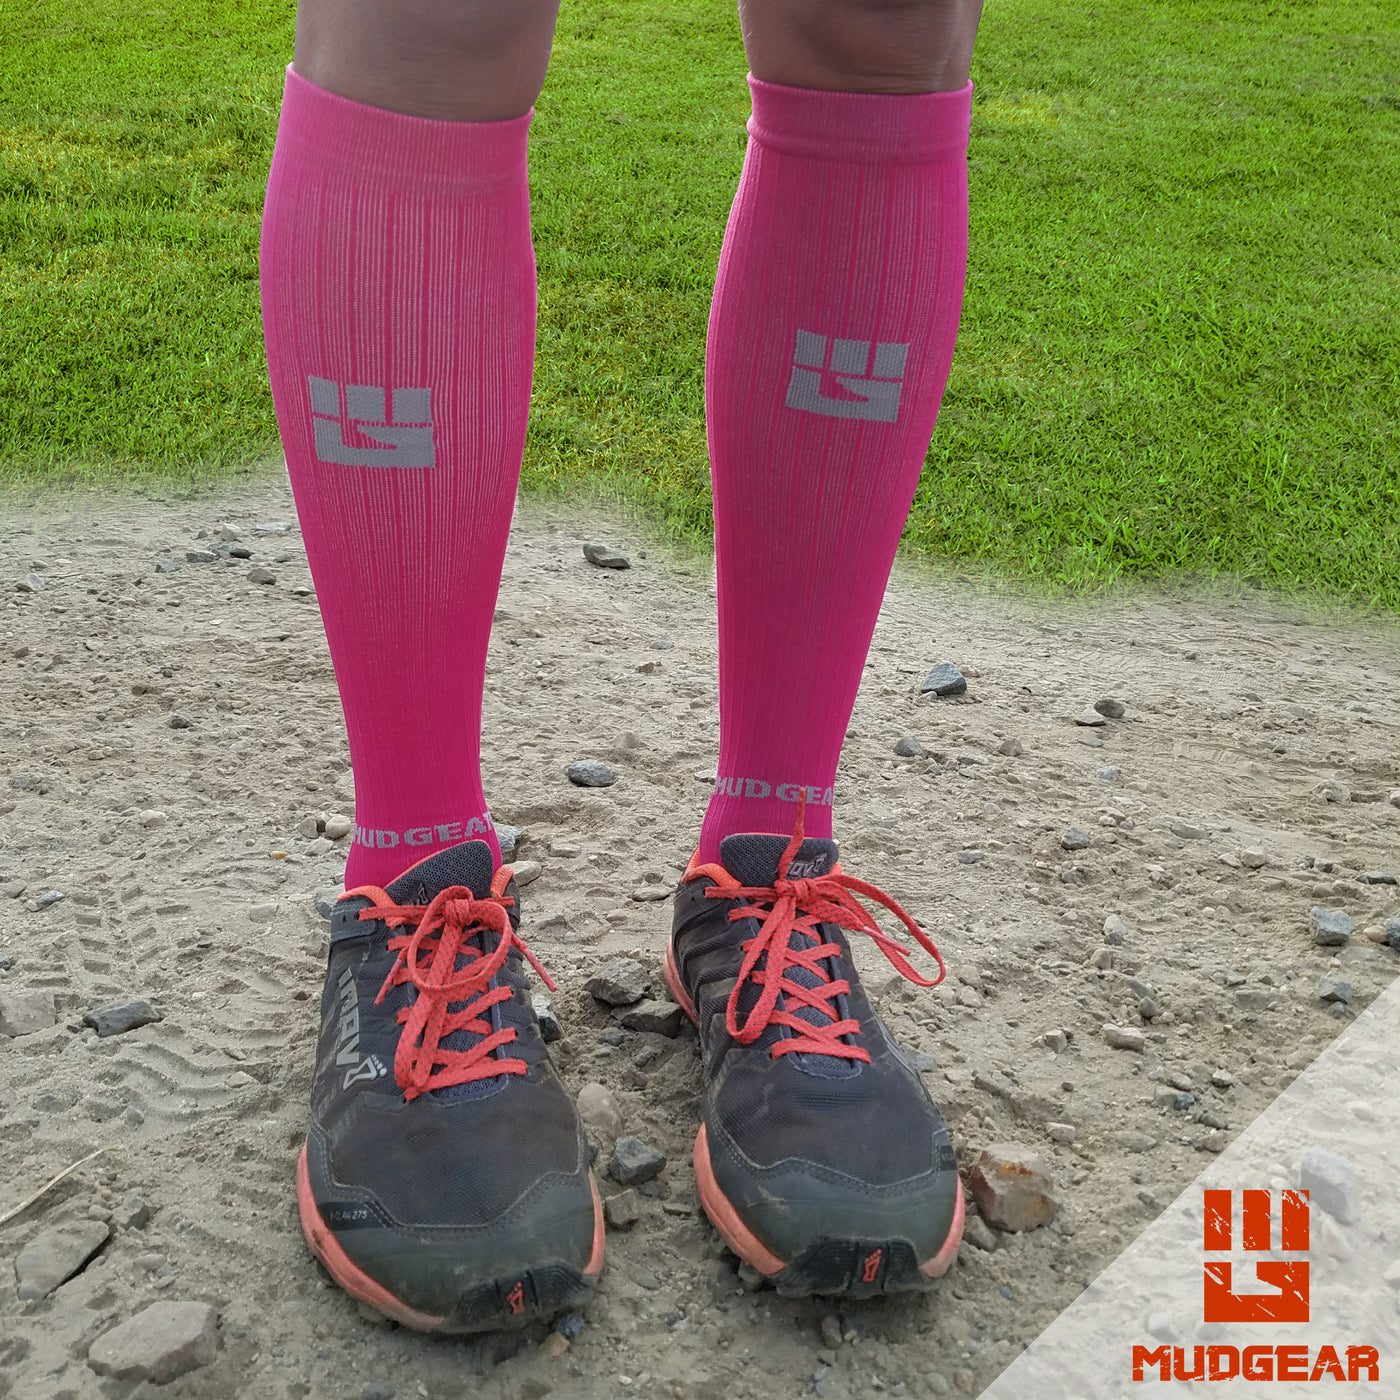 Mudgear - compression socks for running